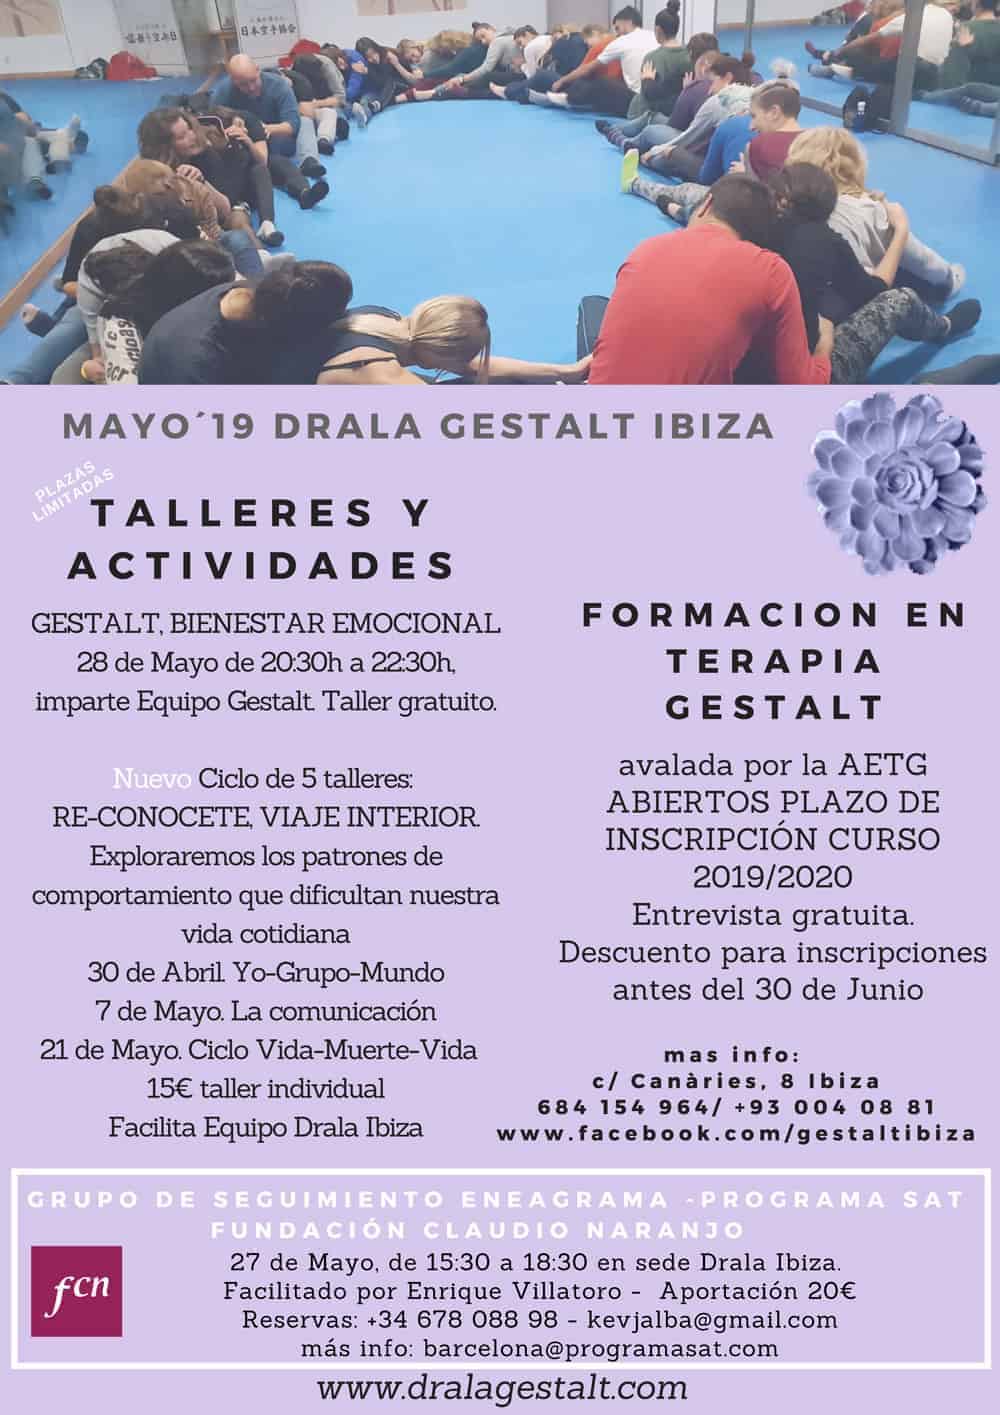 actividades-talleres-drala-gestalt-ibiza-mayo-2019-welcometoibiza